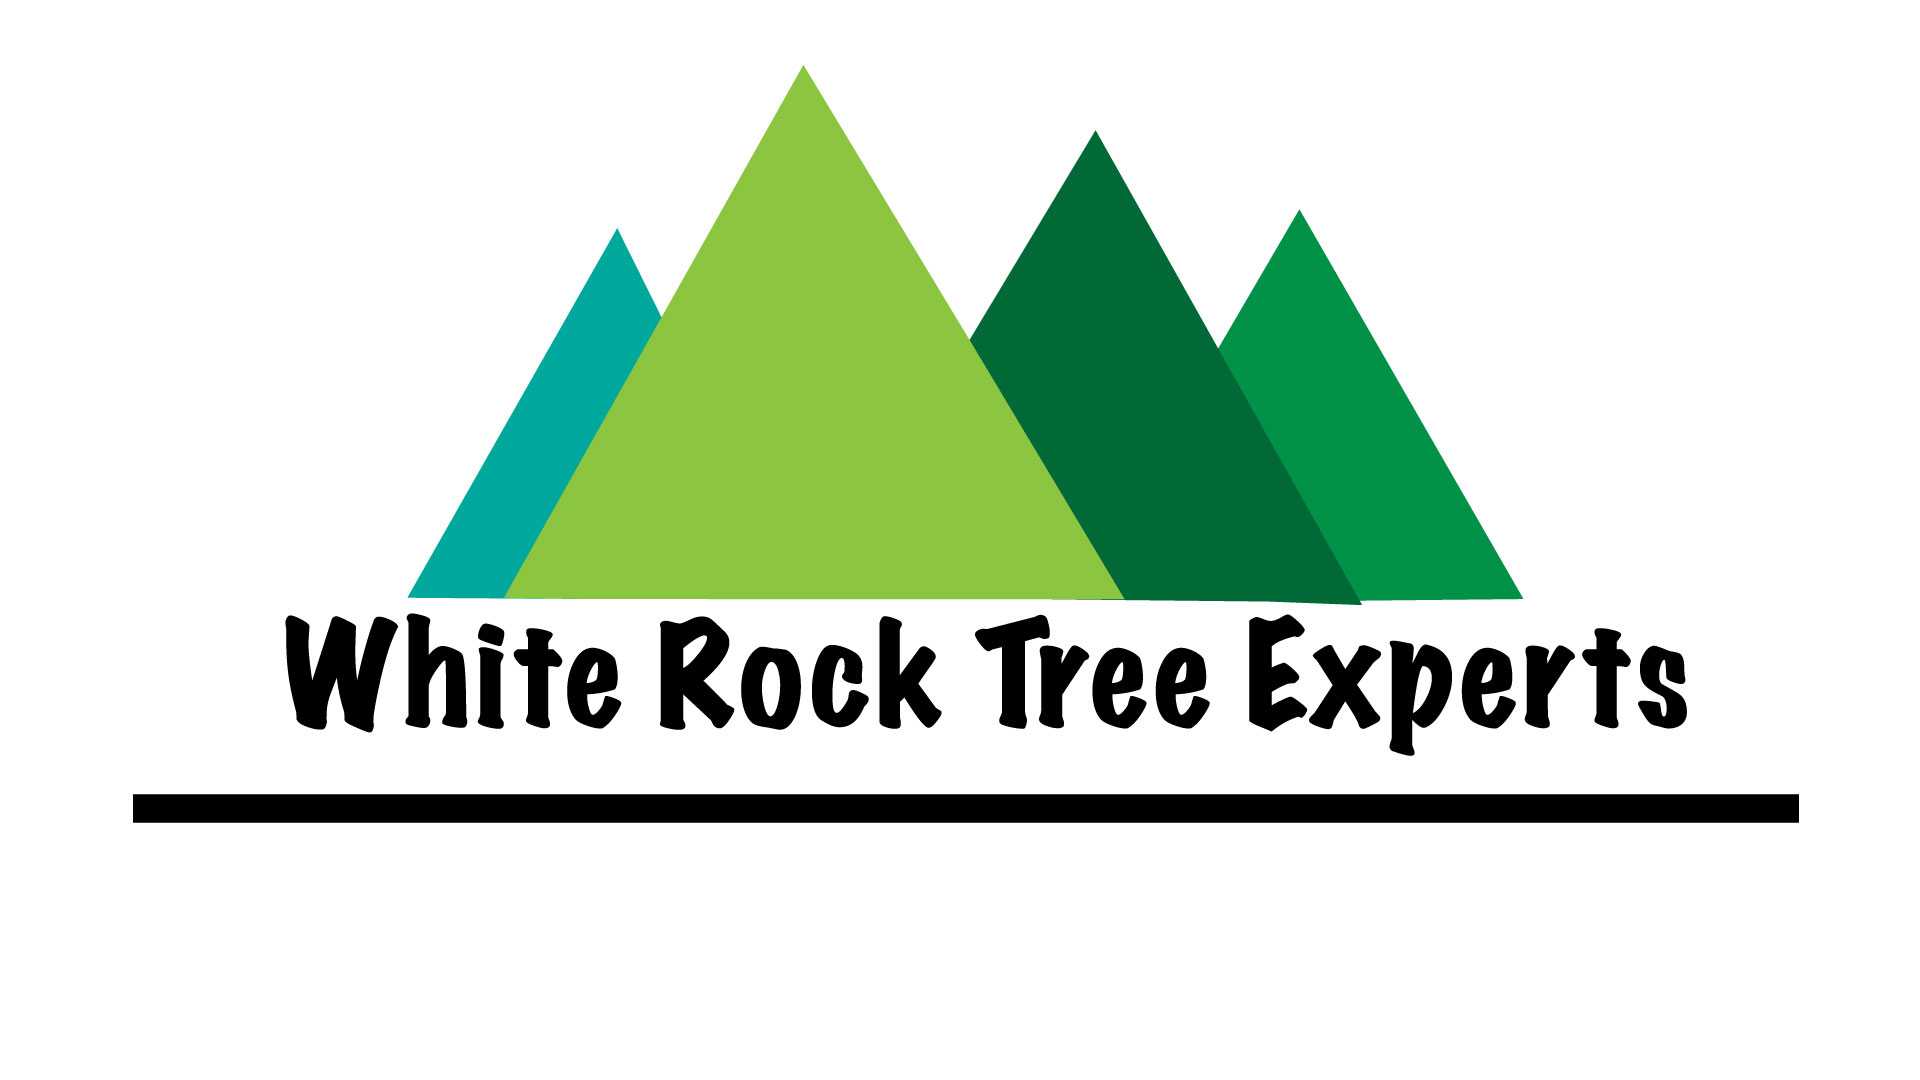 White Rock Tree Experts